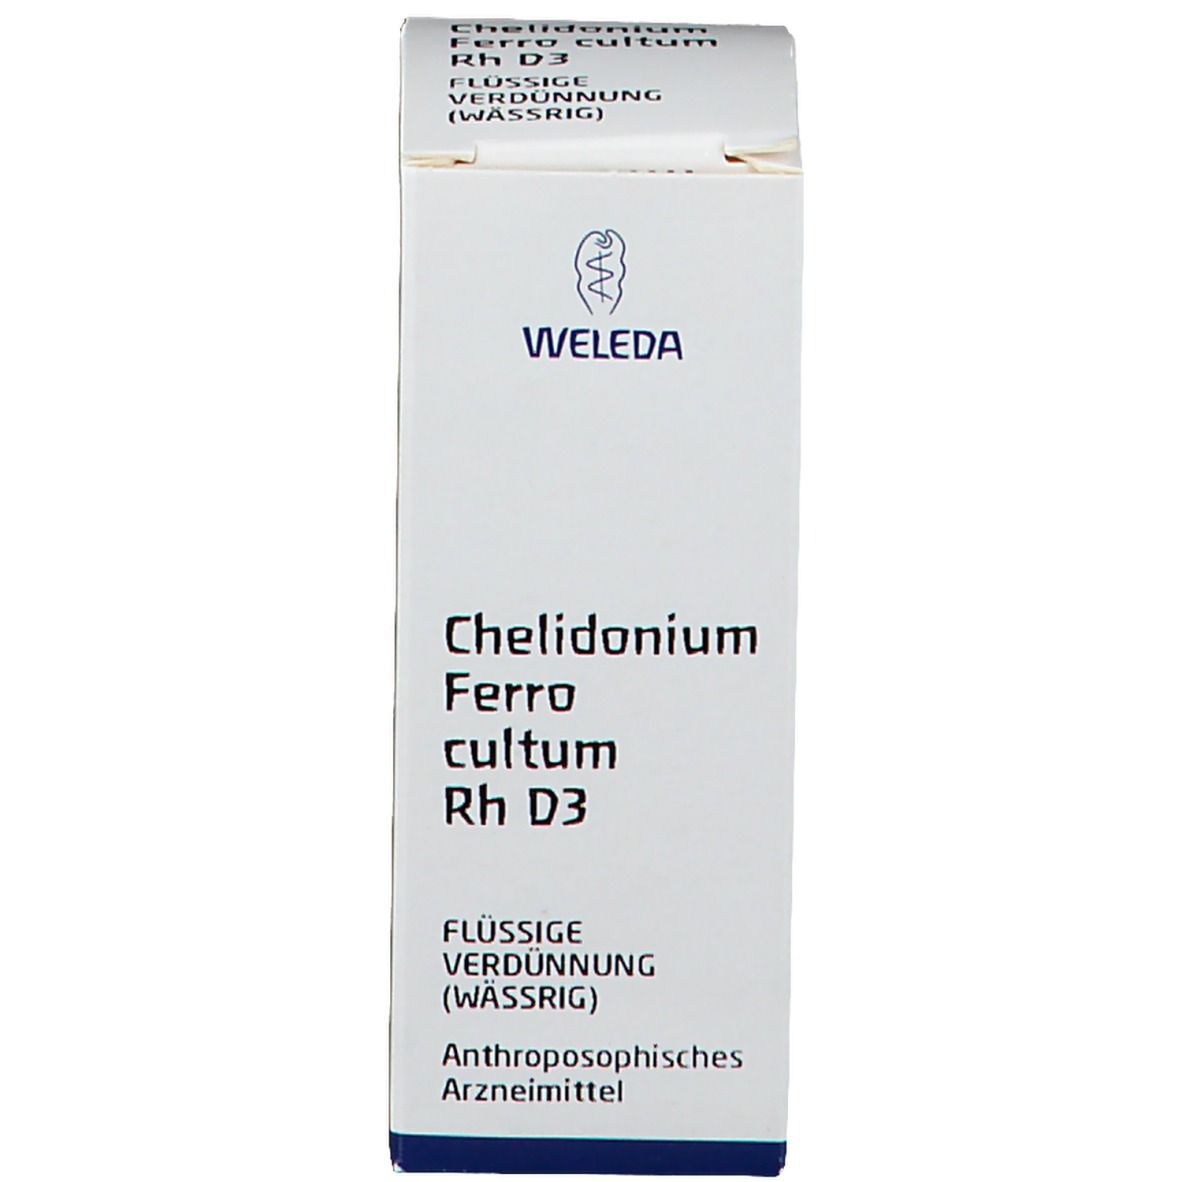 Chelidonium Ferro Cultum Rh D3